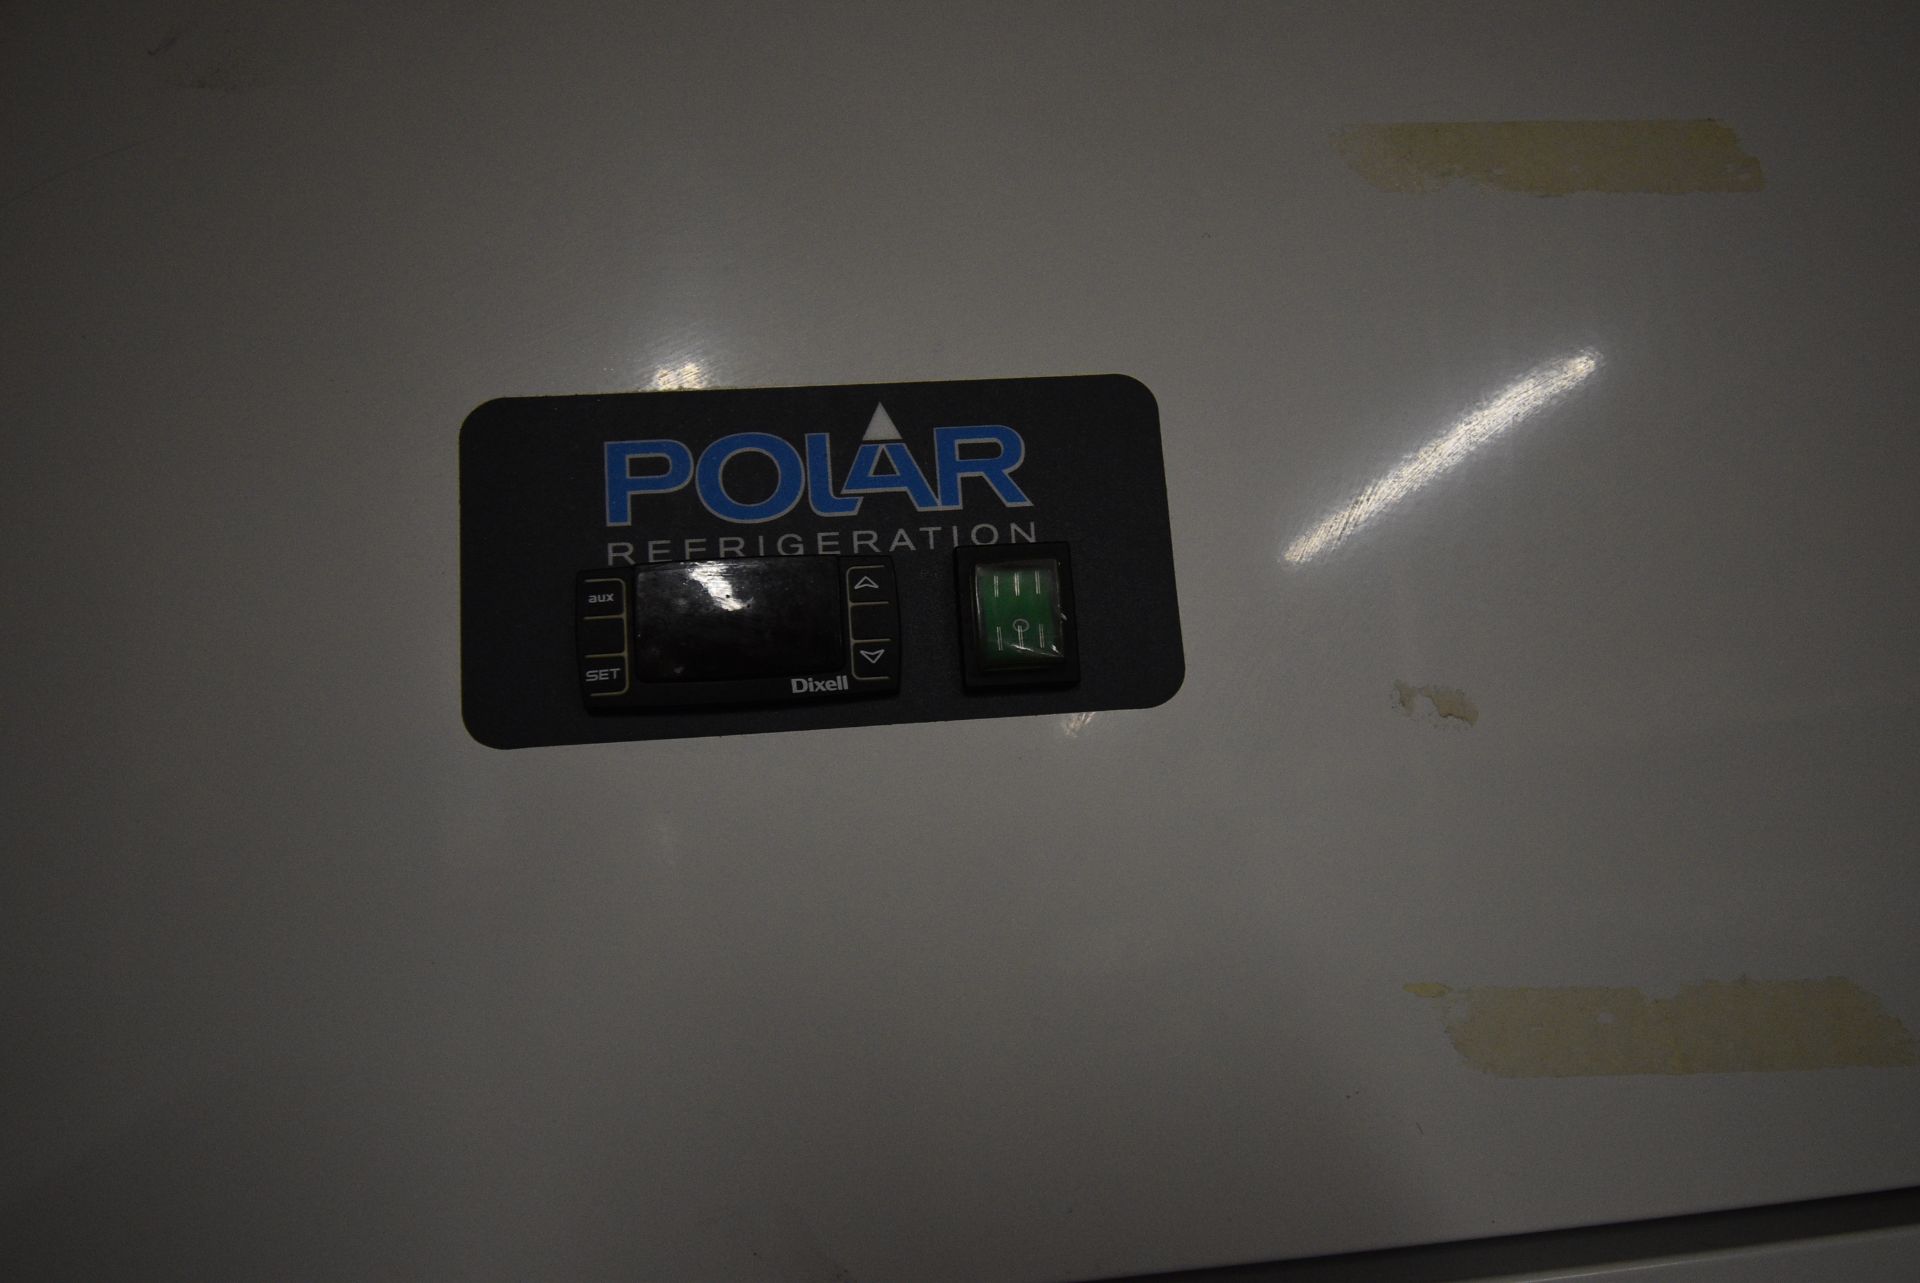 Polar CC663-02 Upright Double Door Refrigerator - Image 2 of 4